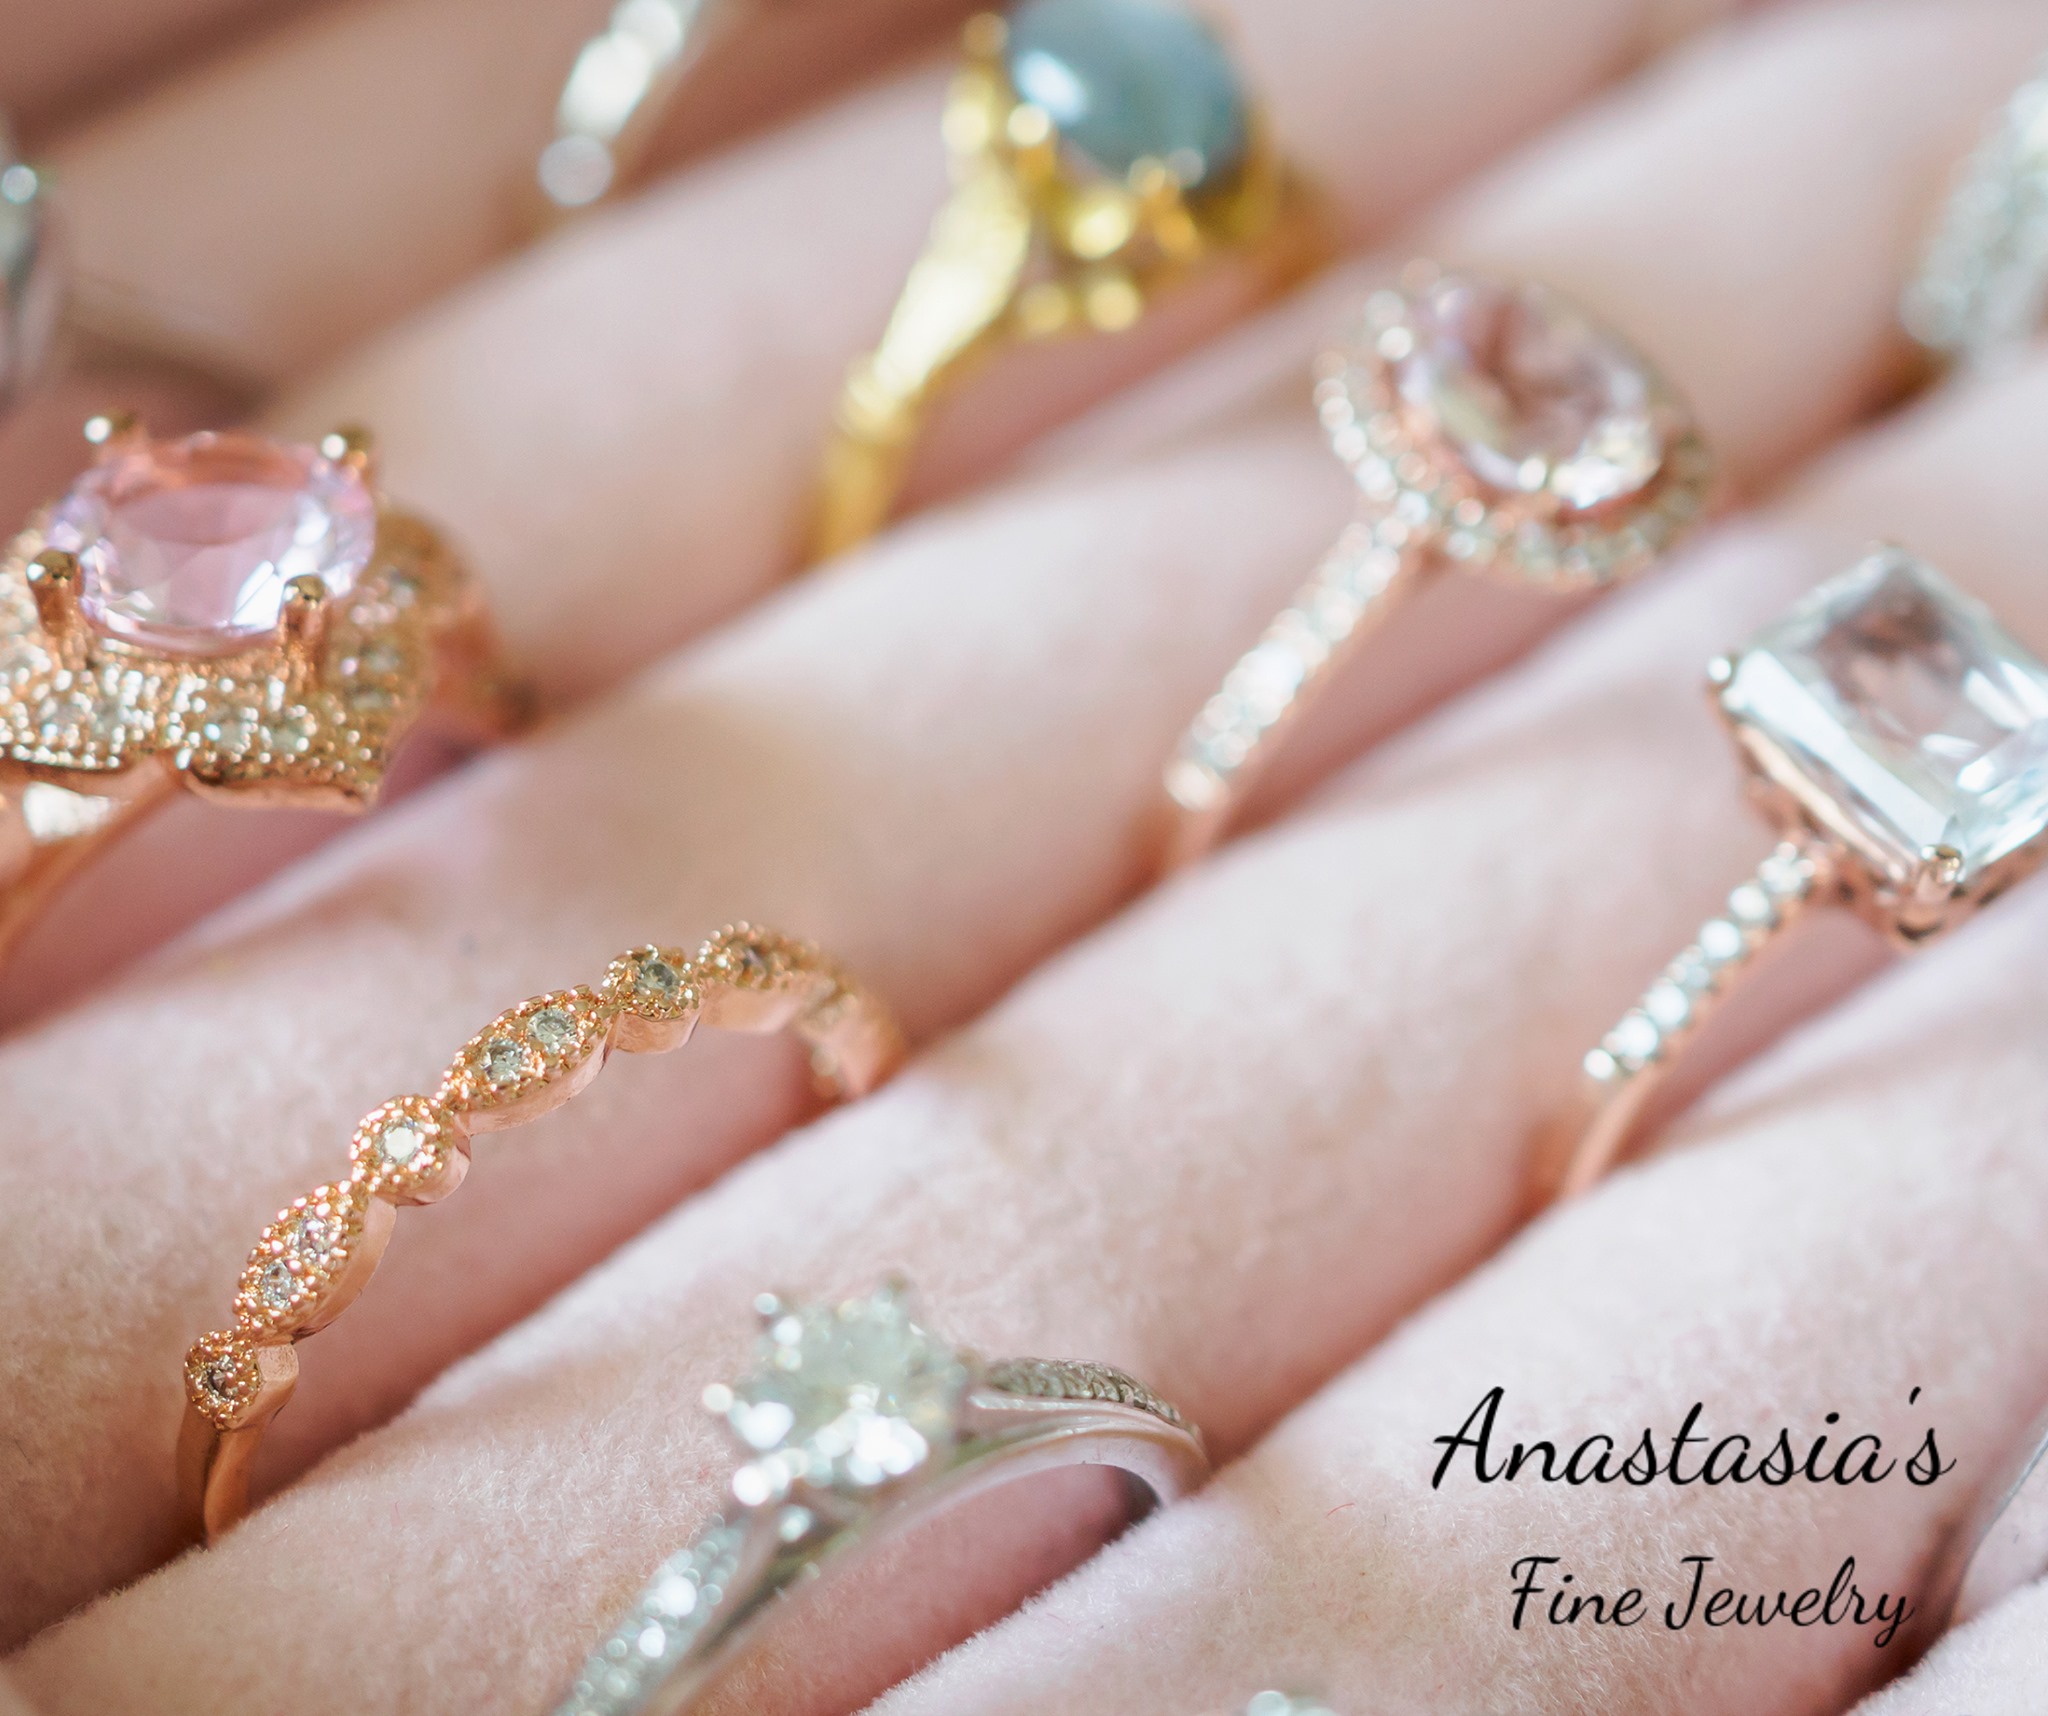 Anastasia's Fine Jewelry